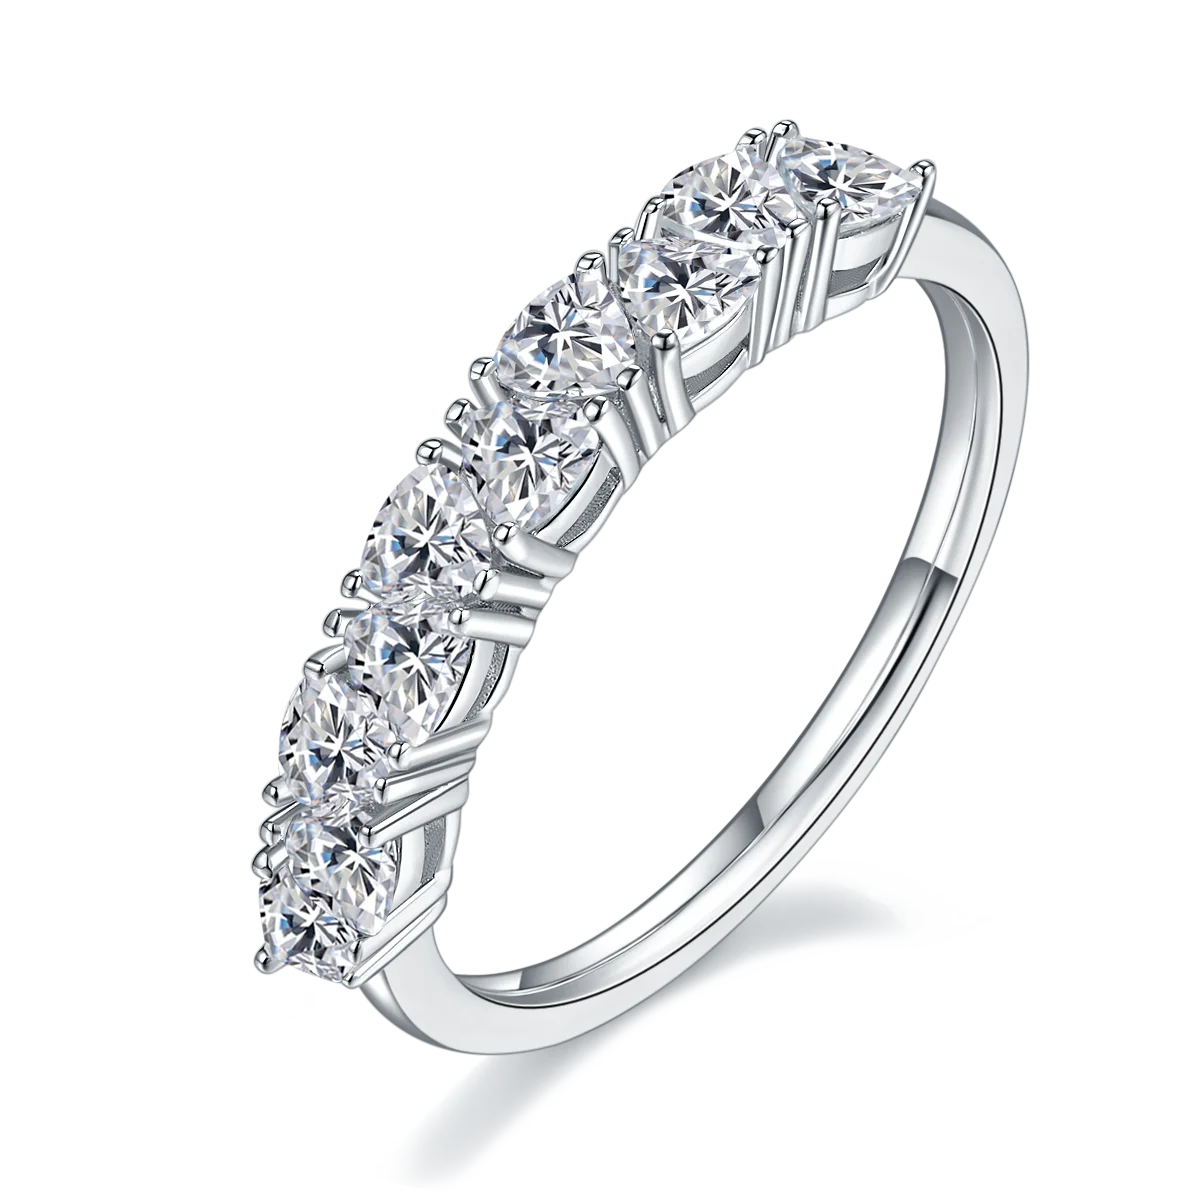 GEM'S BALLET 18K White Gold Plated 925 Sterling Silver Moissanite Ring Luxe Anthology Moissanite Diamond Wedding Band Rings 925 Sterling Silver Triangle Shape